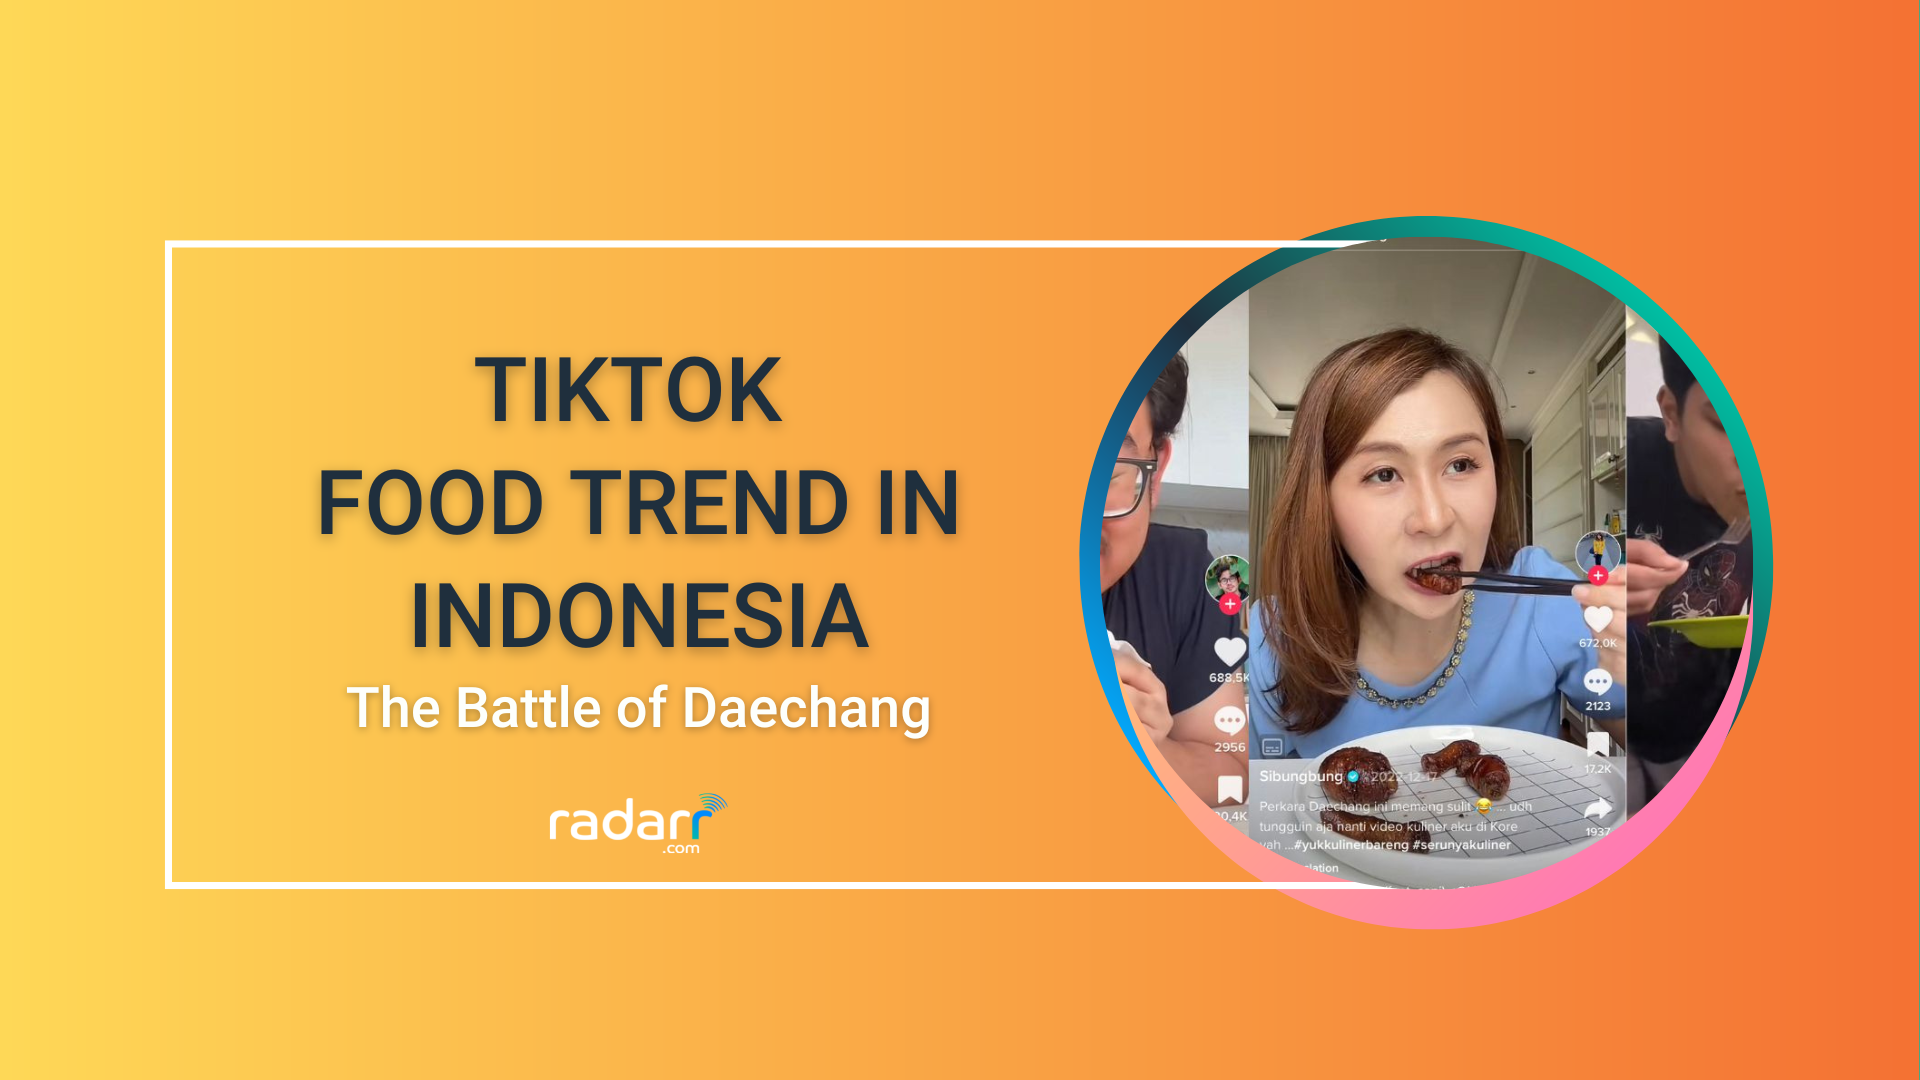 TikTok Food Trends in Indonesia: The Battle of Daechang